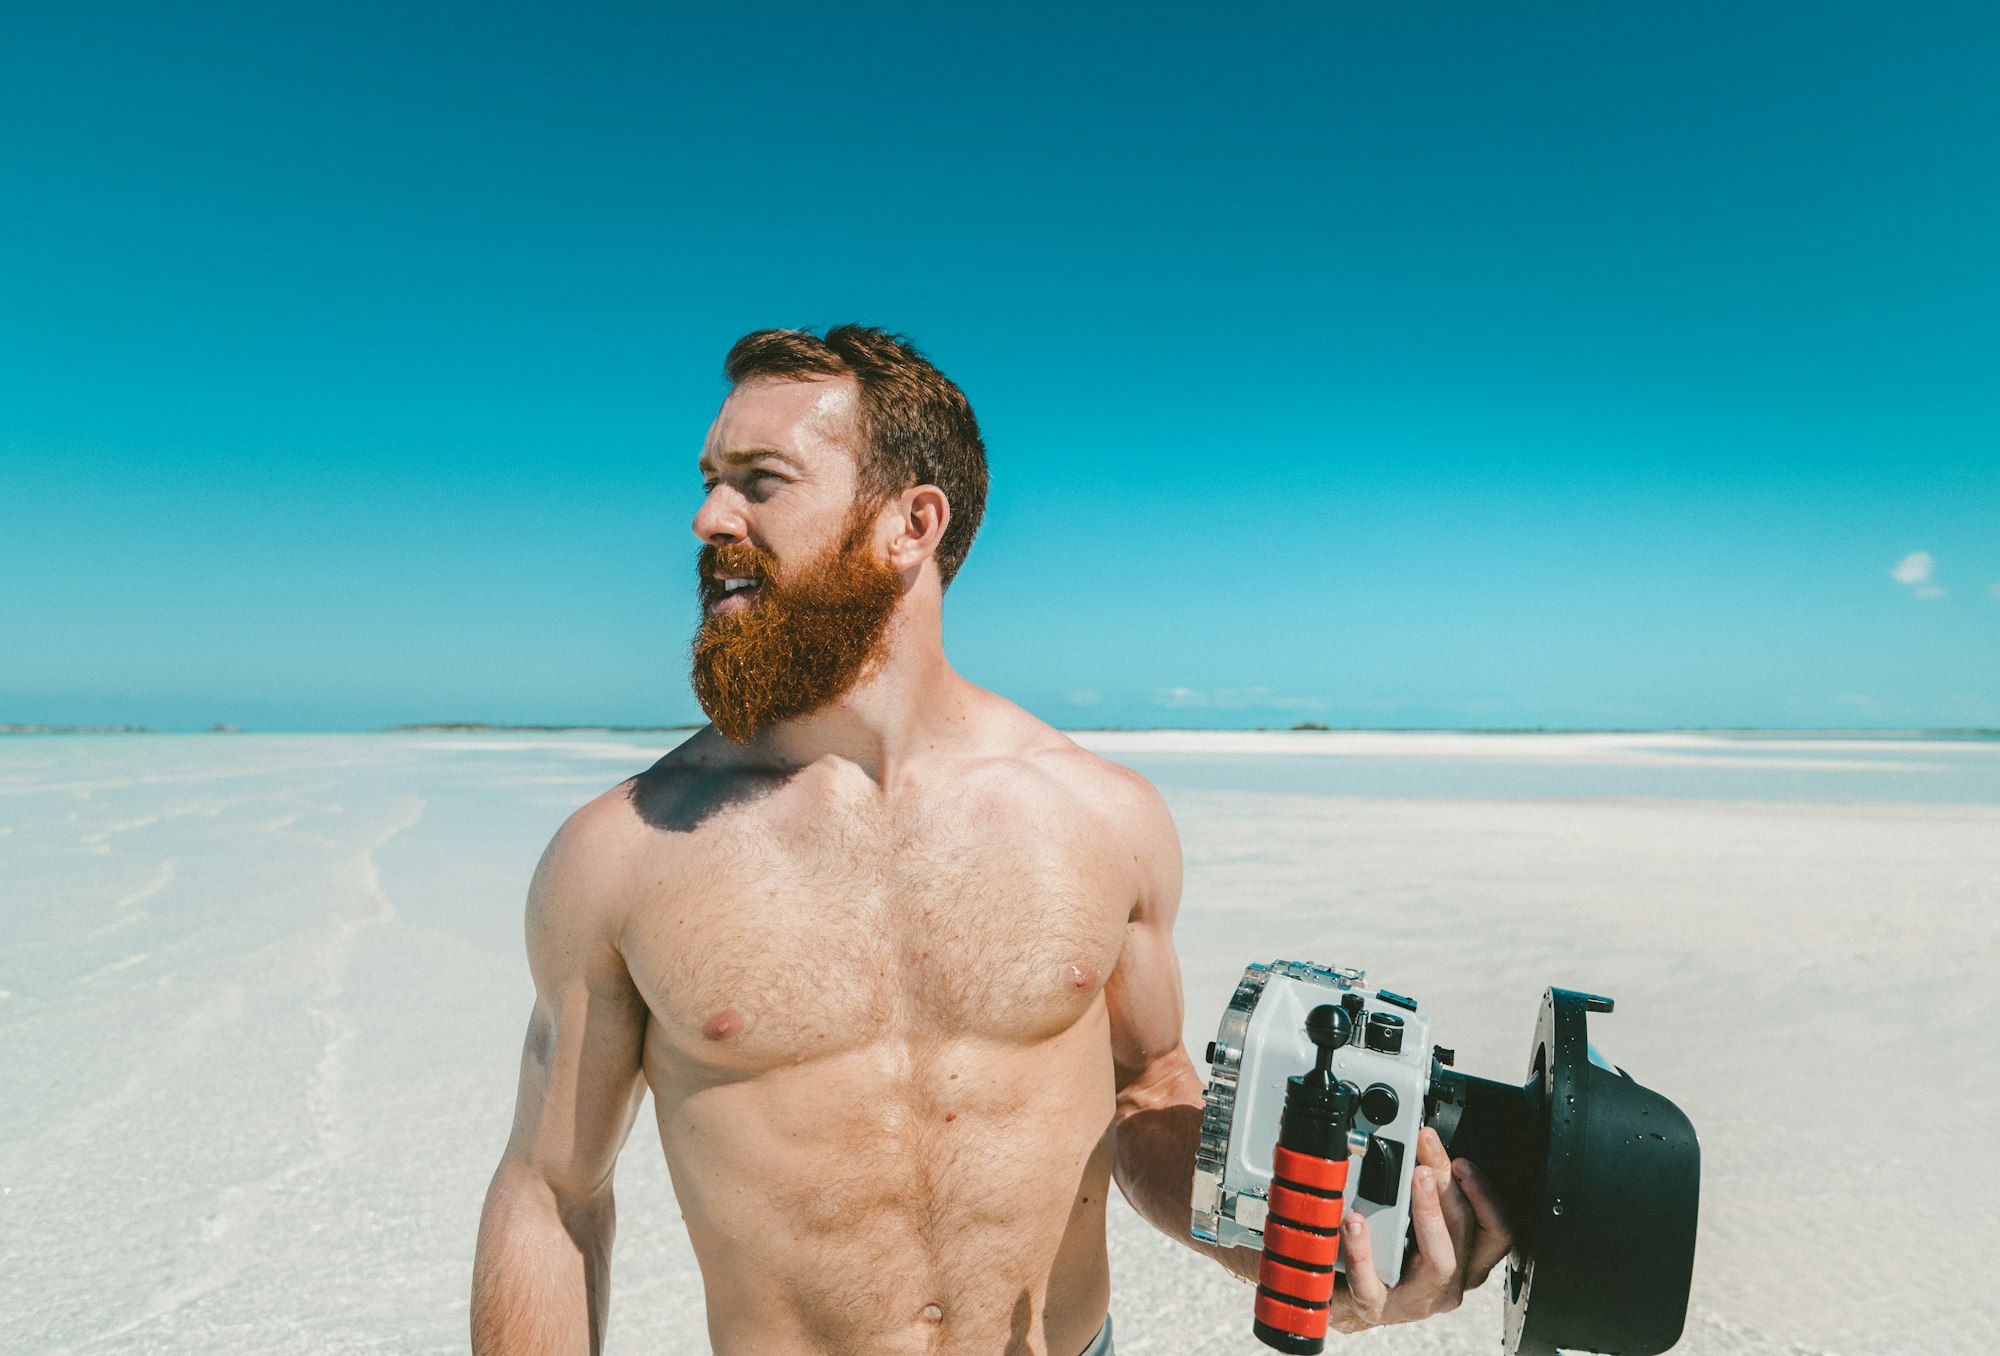 Man with a camera on a beach